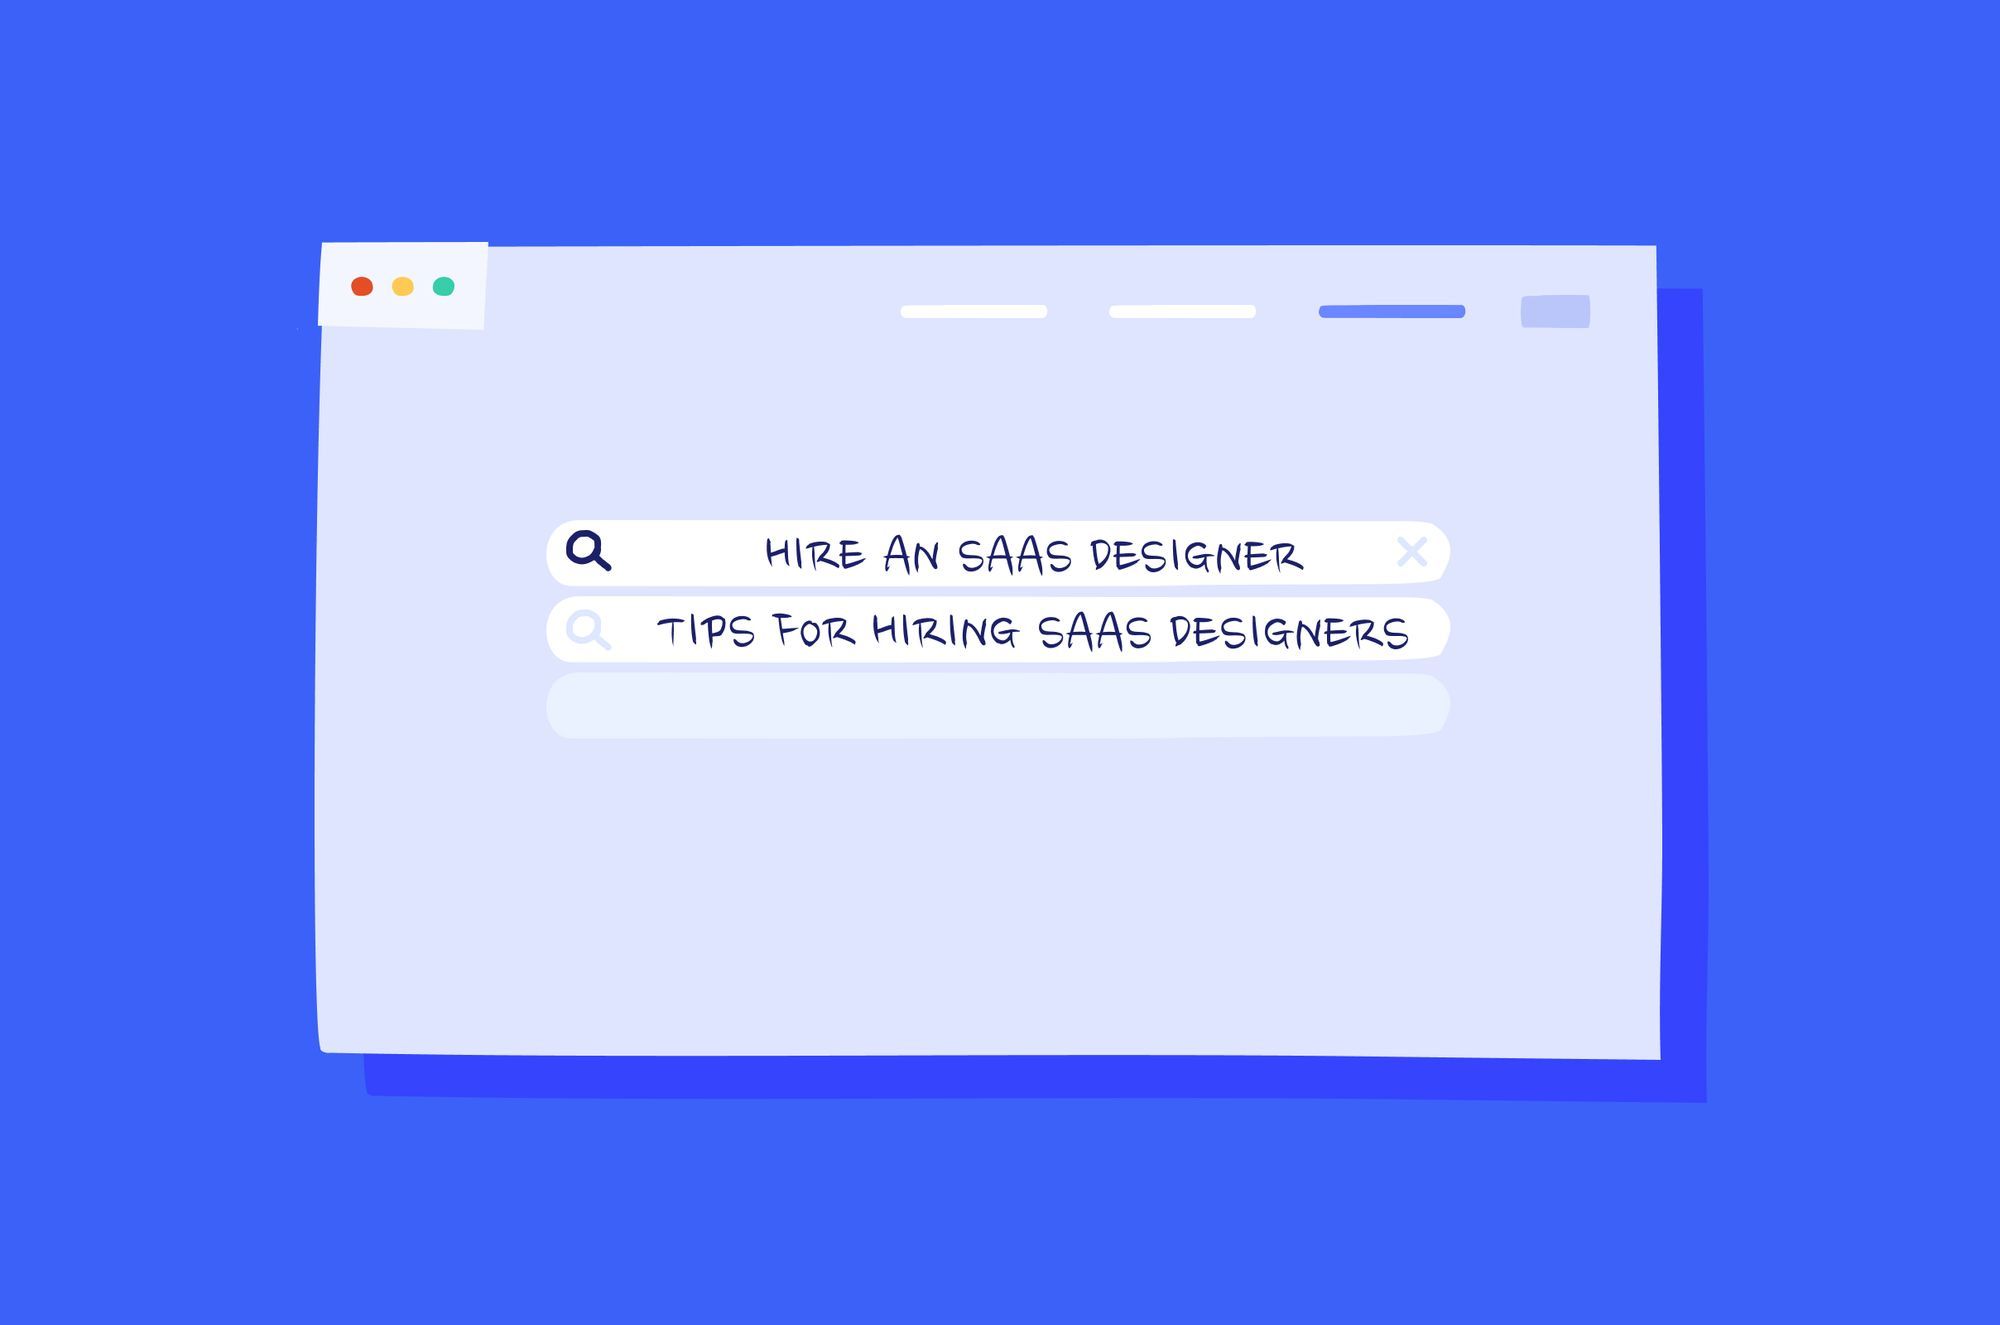 Hire an SaaS designer–tips for hiring SaaS designers